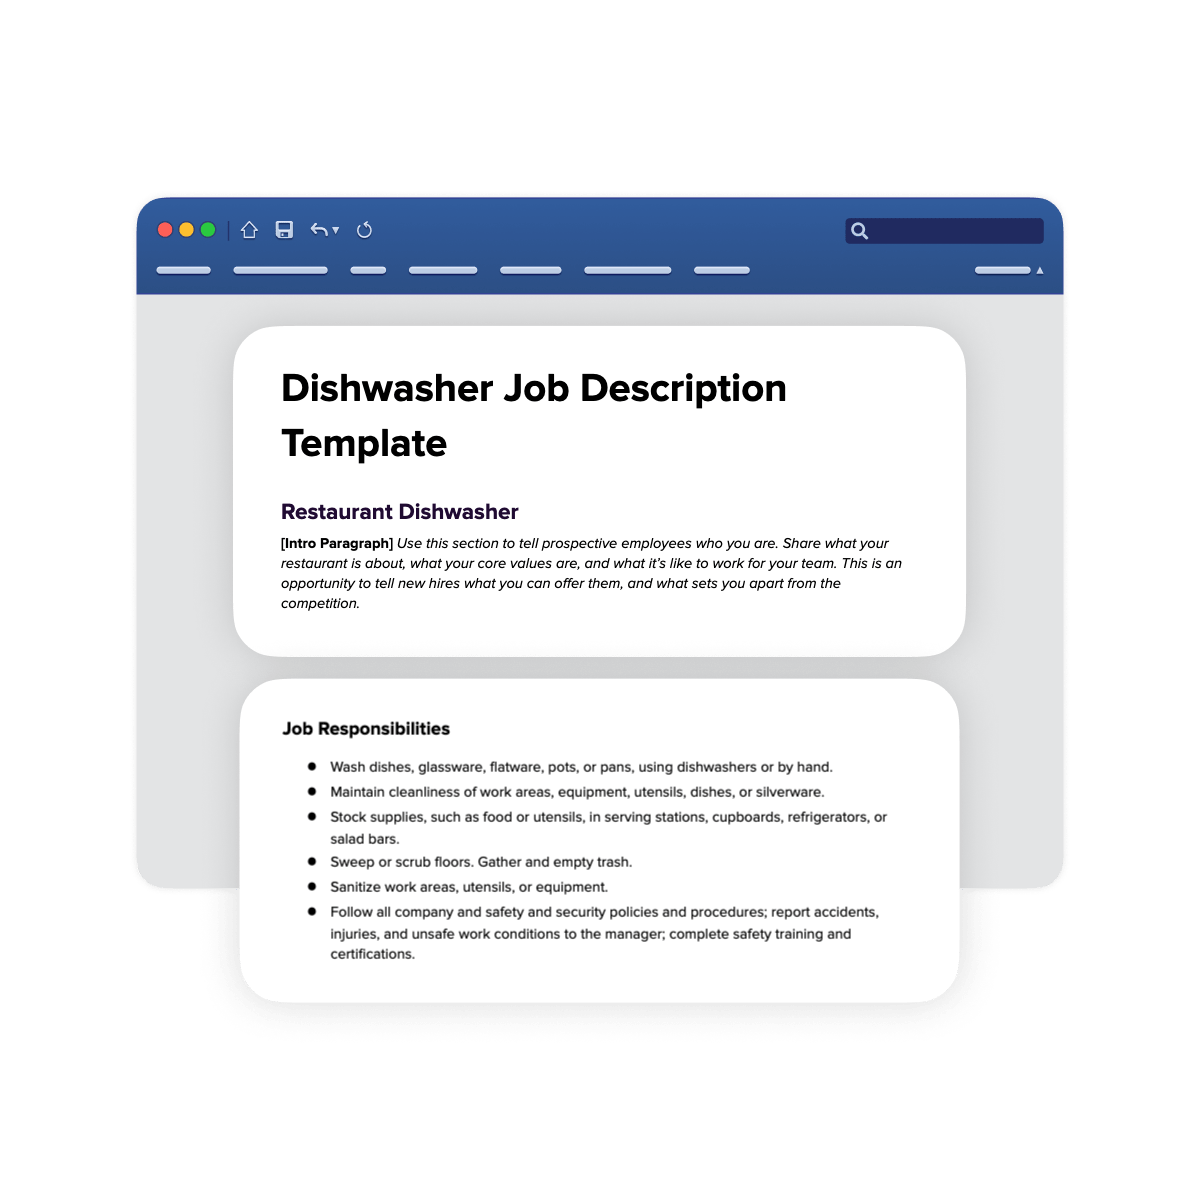 Example dishwasher job description template